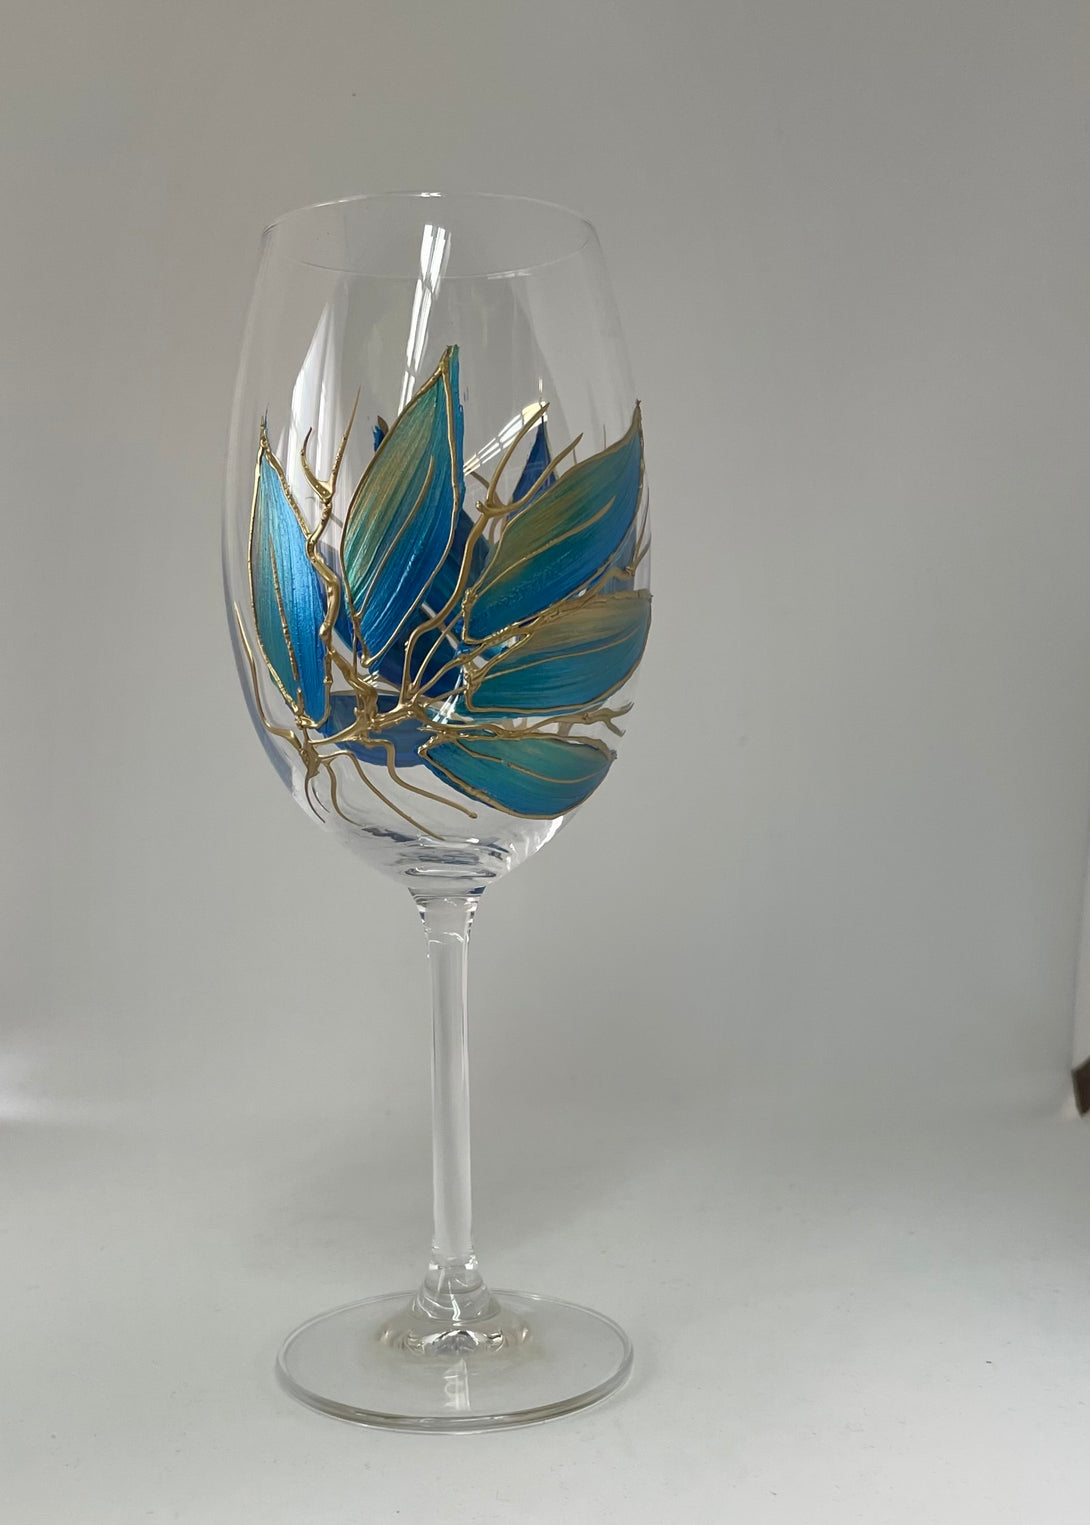 Lori Schiersmann - Wine Glass  - blue/teal/gold by Lori Schiersmann - McMillan Arts Centre - Vancouver Island Art Gallery